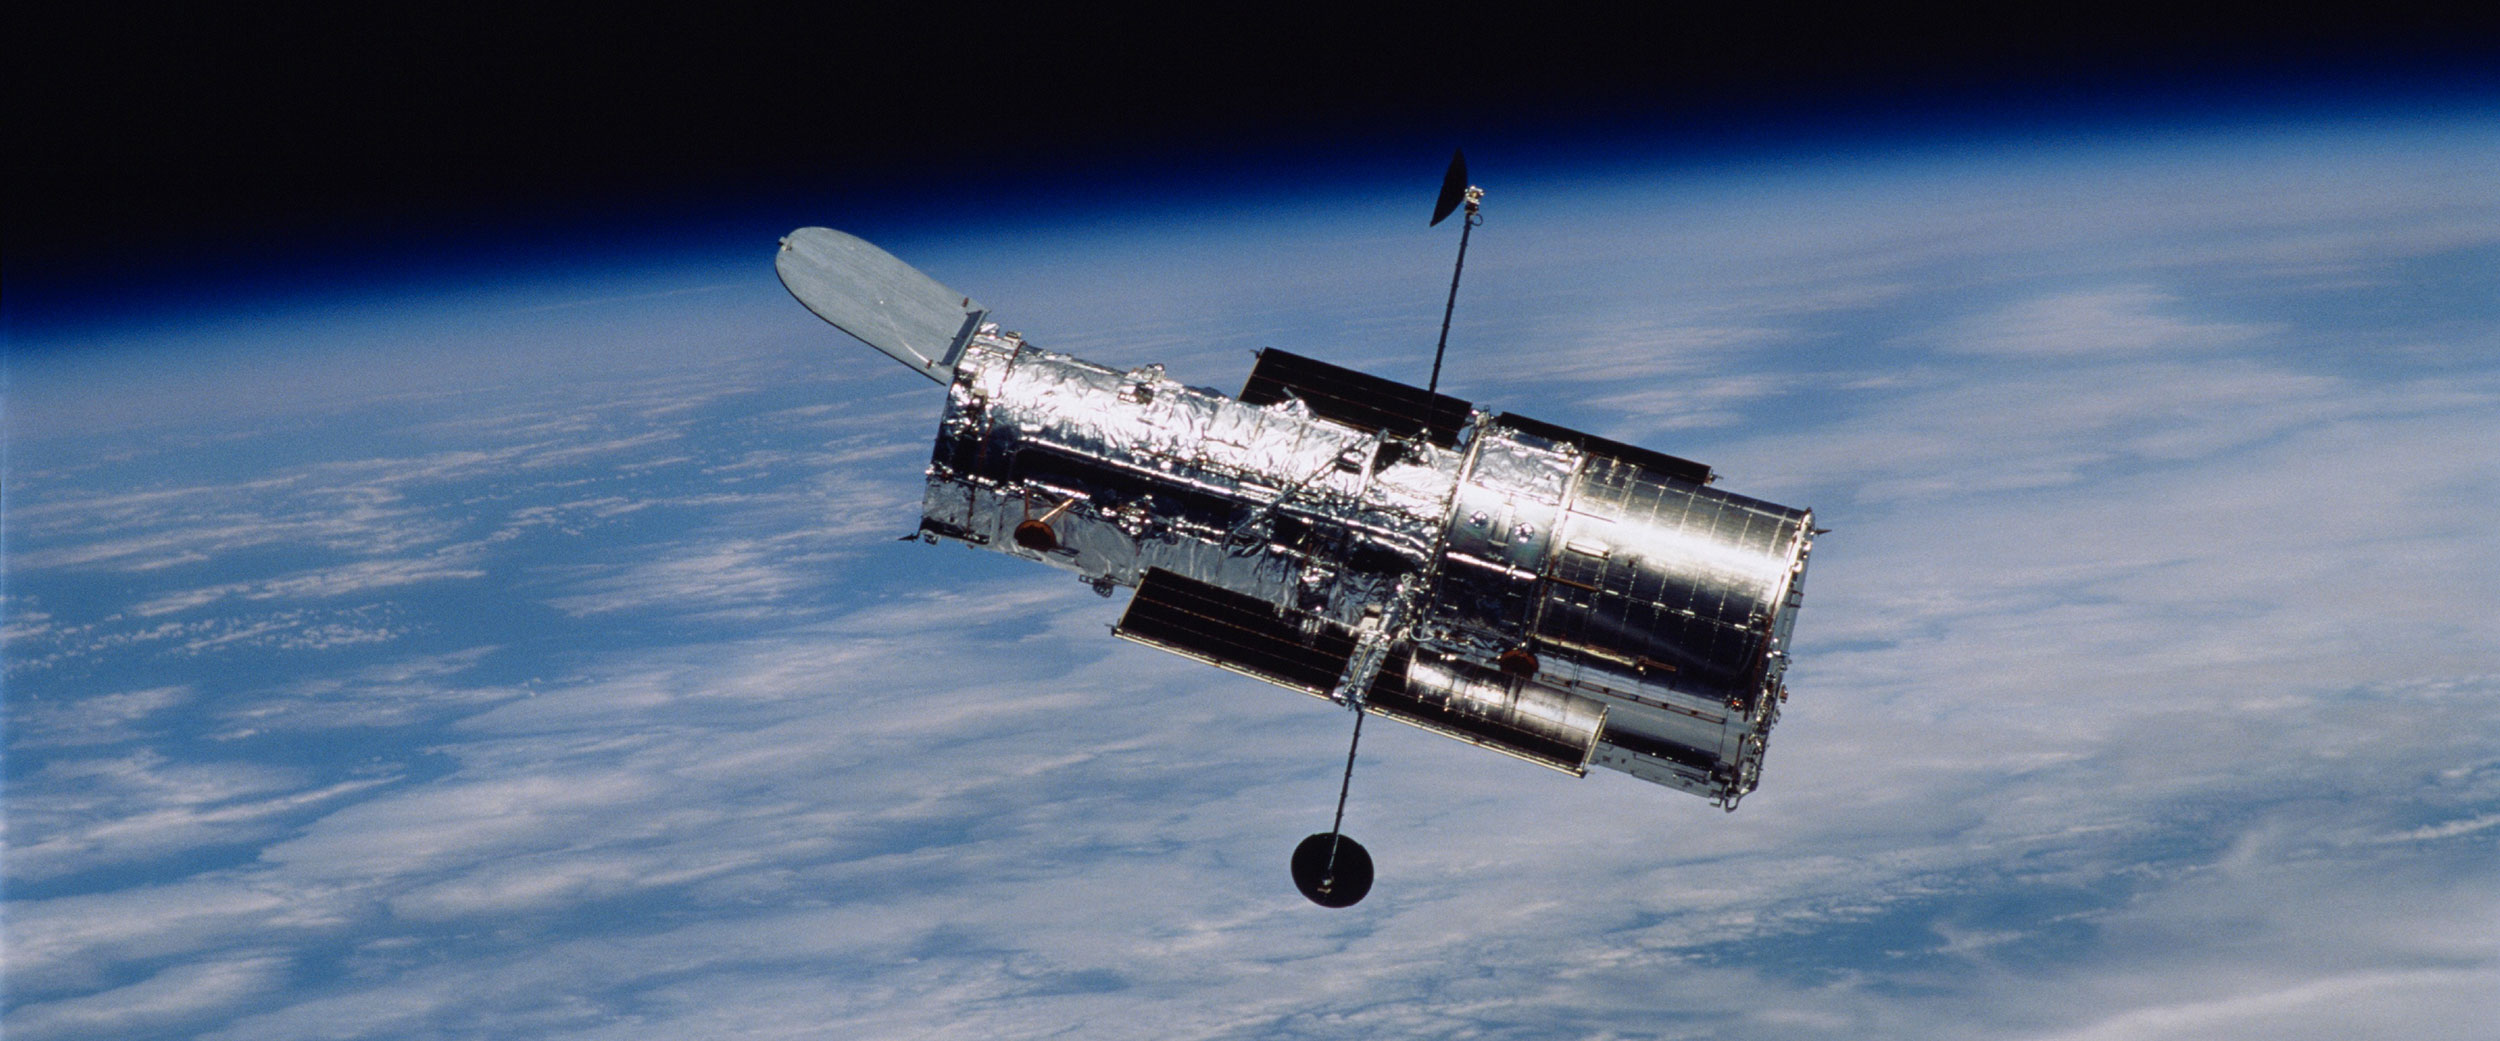 NASA's Hubble Space Telescope above earth